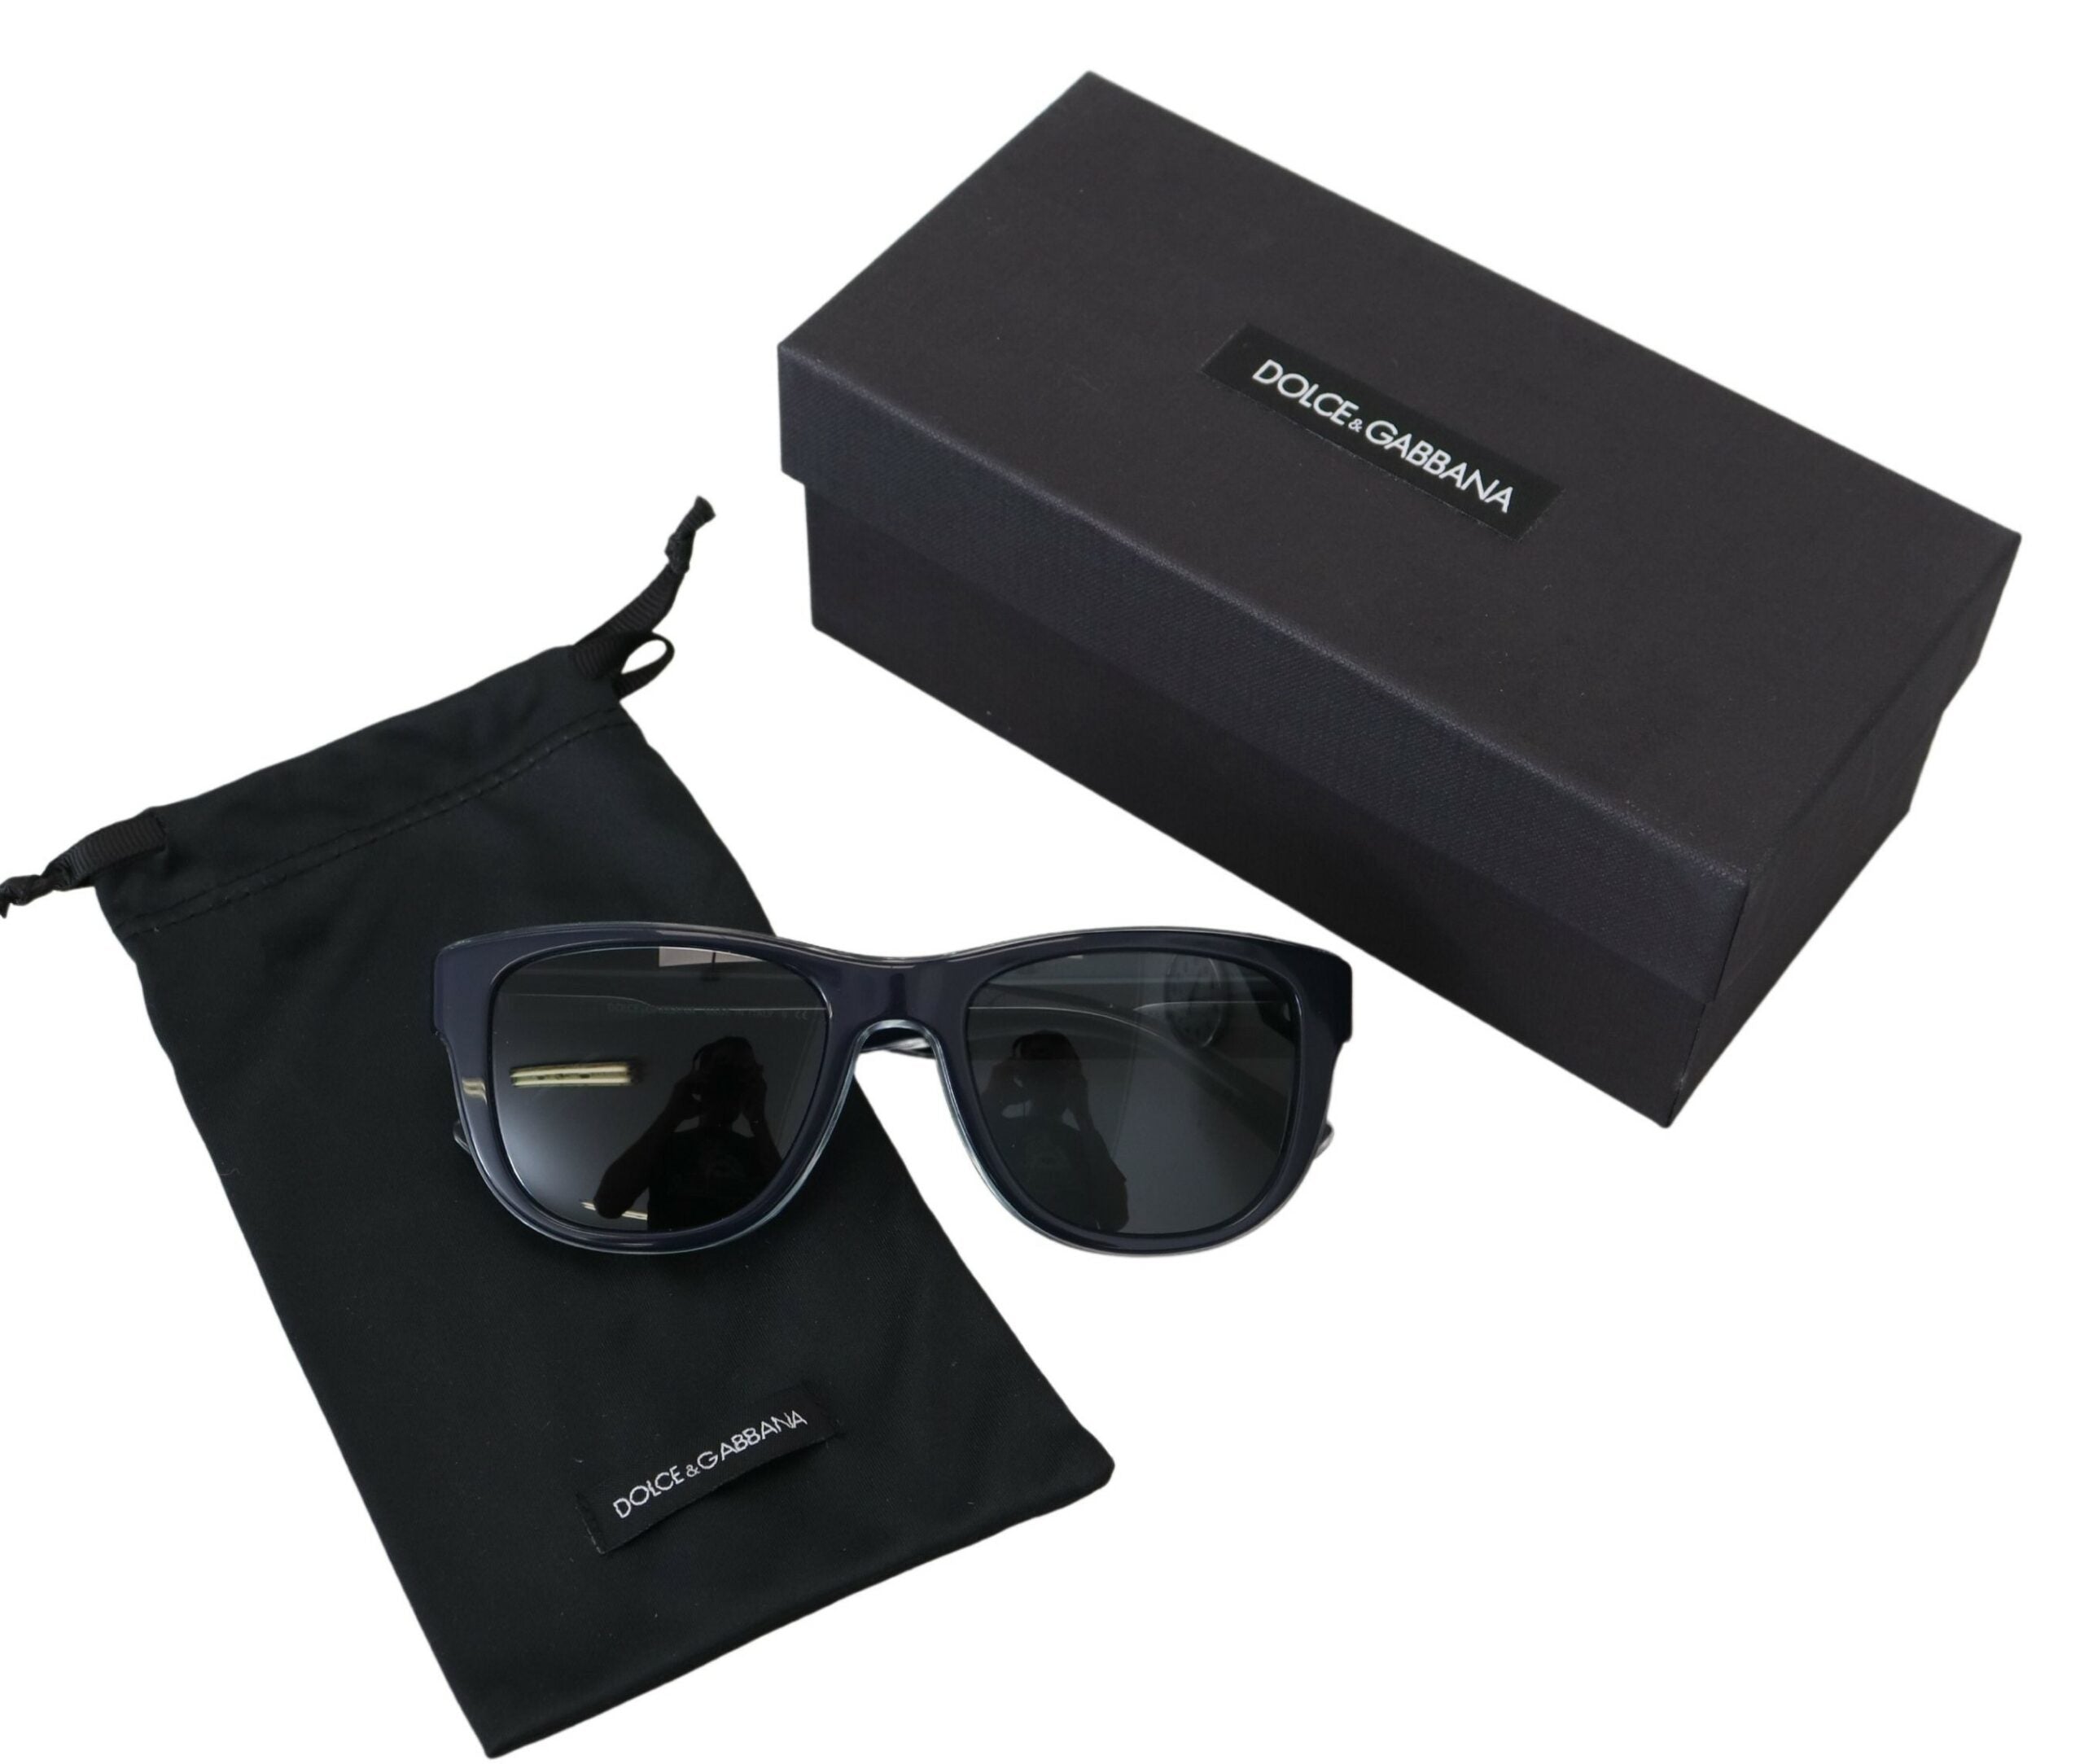 Dolce & Gabbana Chic Blue Acetate Designer Sunglasses